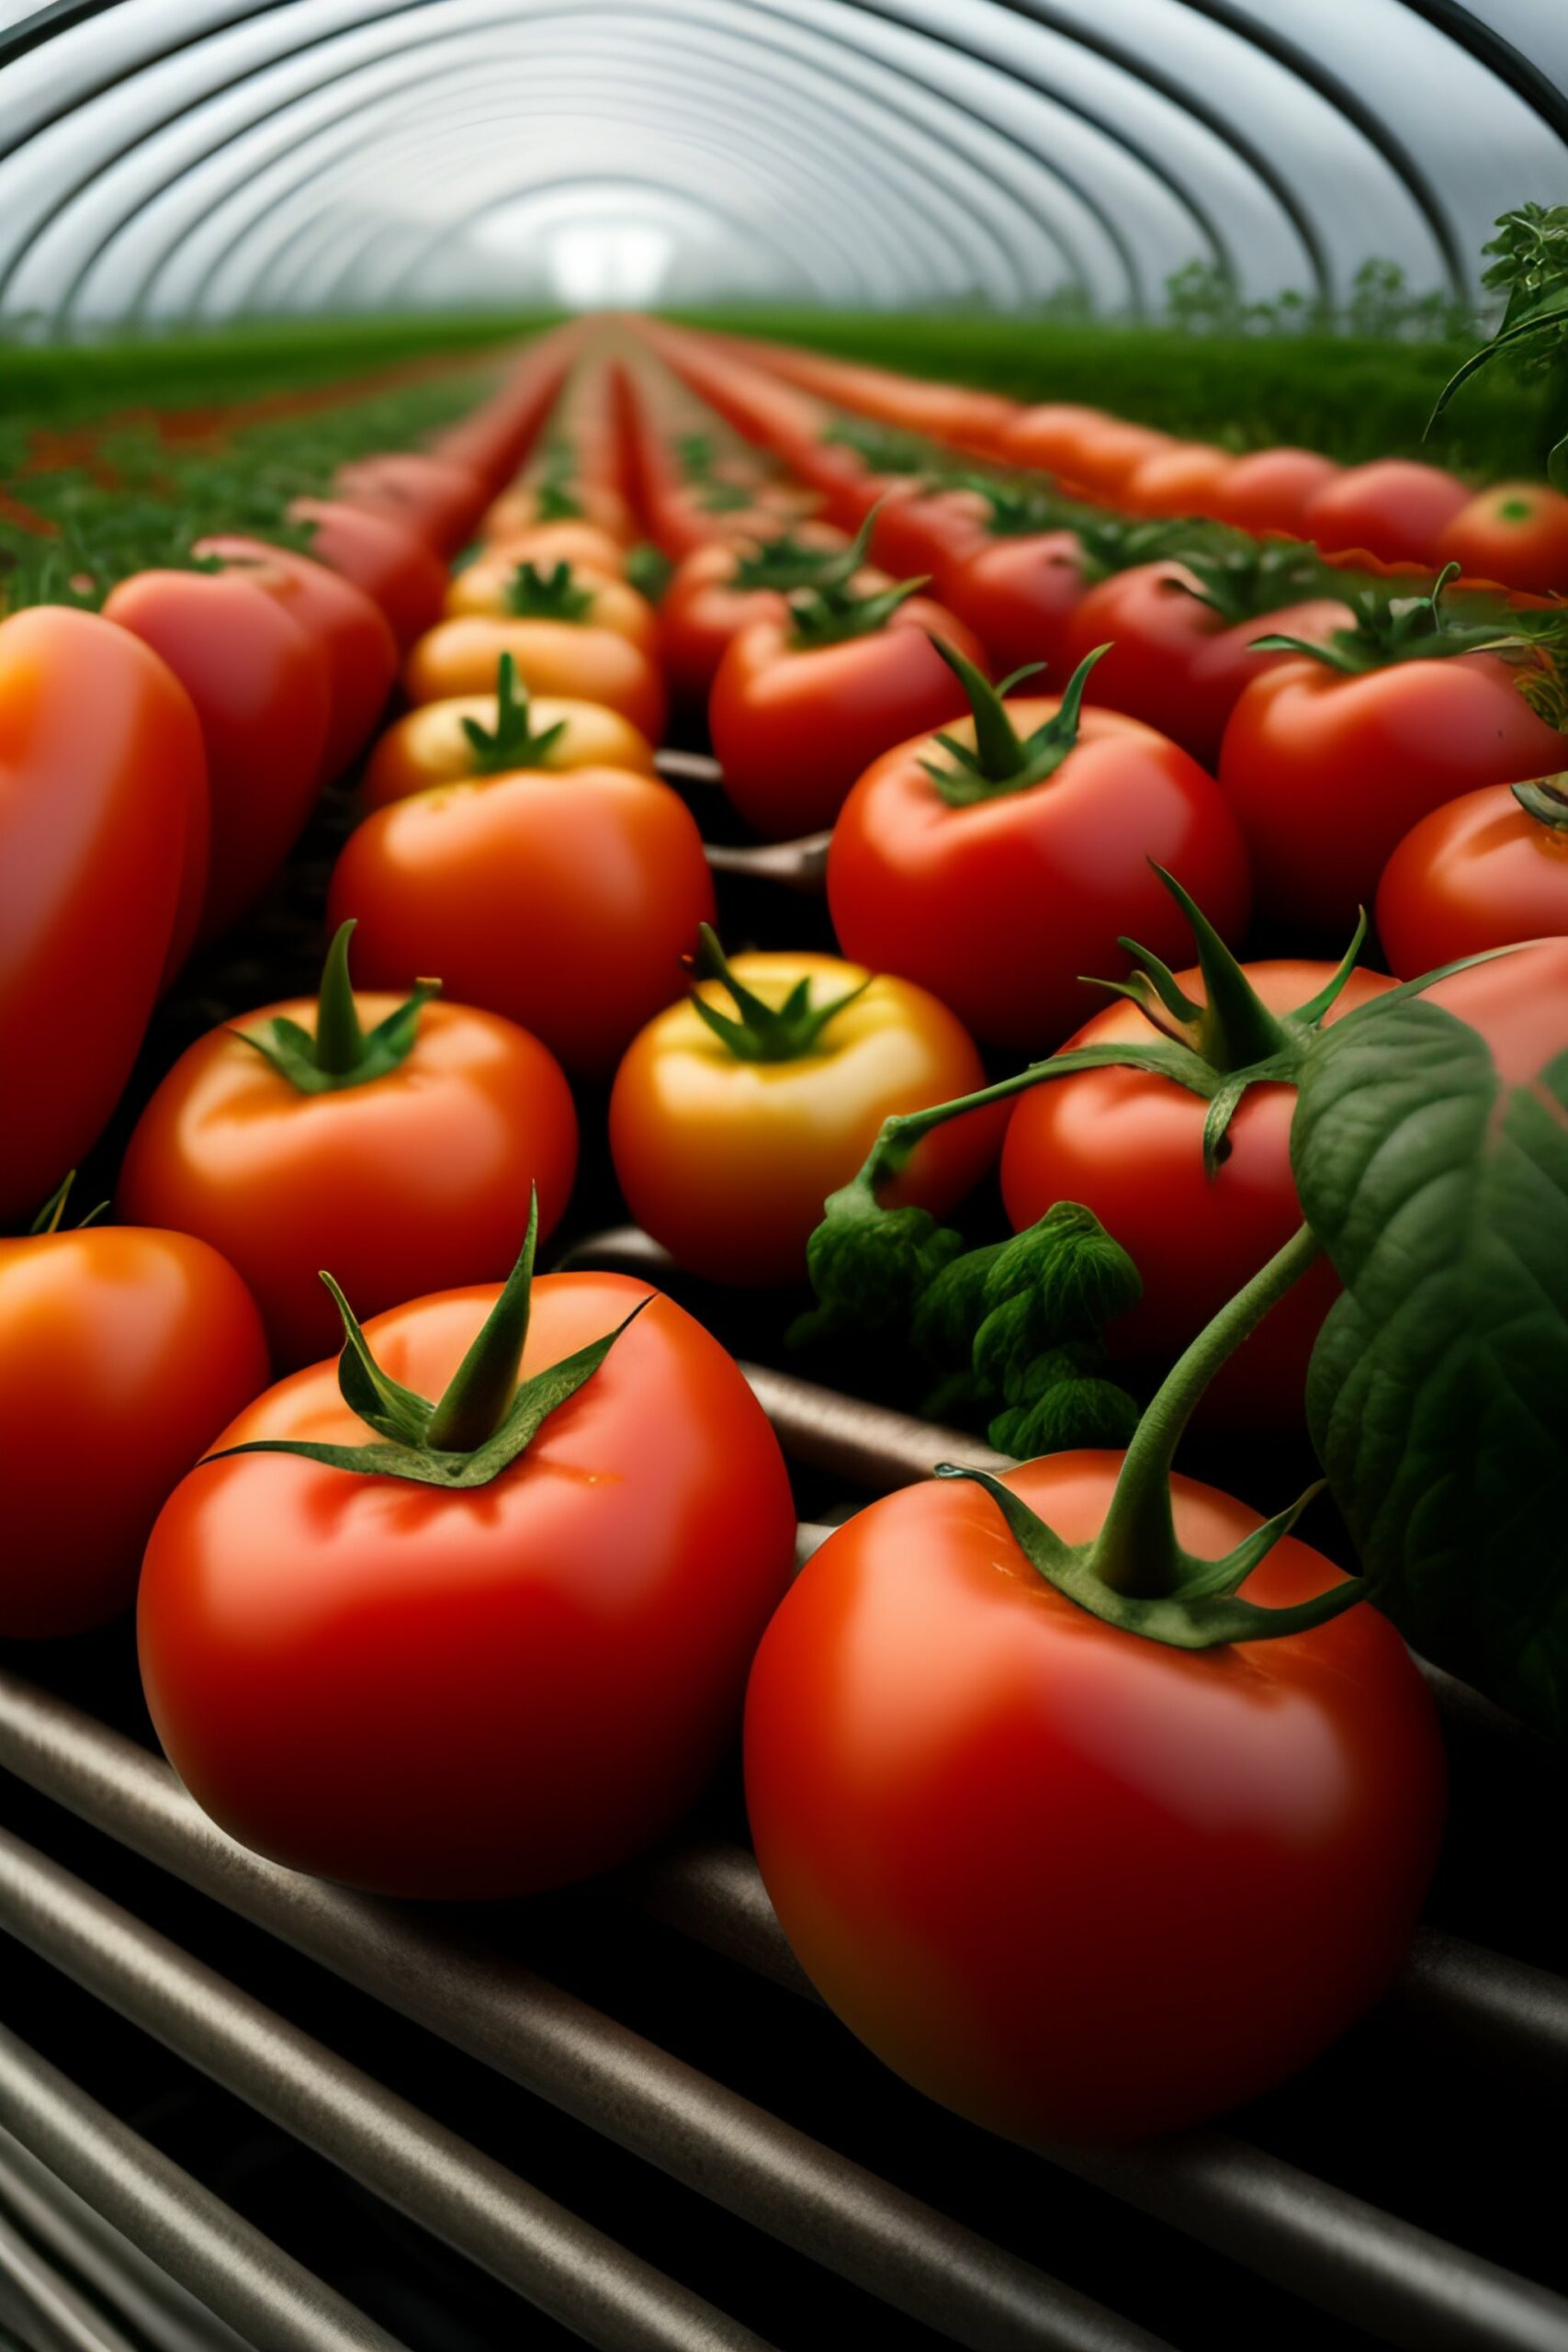 Health Balanced The Growing Demand for Organic Food Production